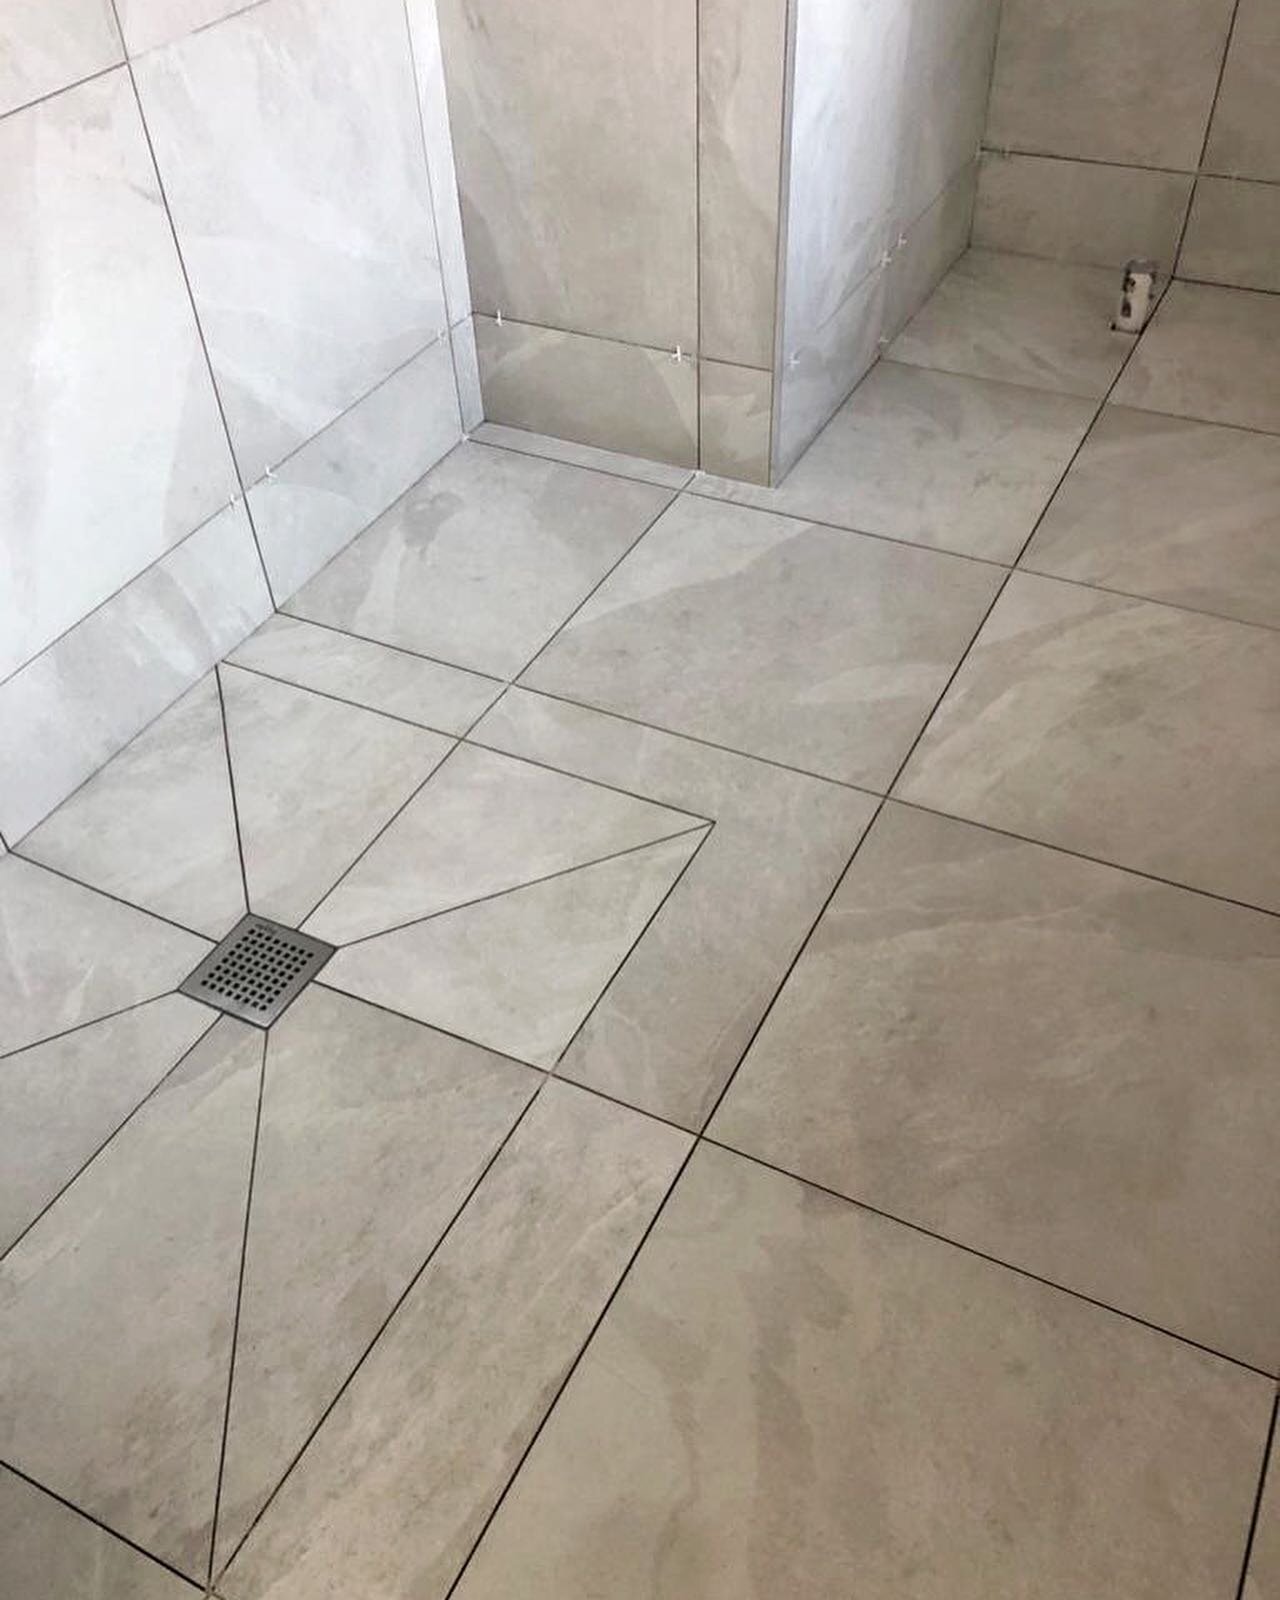 wet room in progress using 60x60 porcelain tiles supplied by @bocchettaceramica 
.
.
.
.
.
.
.
#tiles #tile #tiledesign #design #living #bathroomdesign #bathroom #bathroomdecor #wetroom #wetroomshower #decor #marble #porcelain #luxury #interiordesign